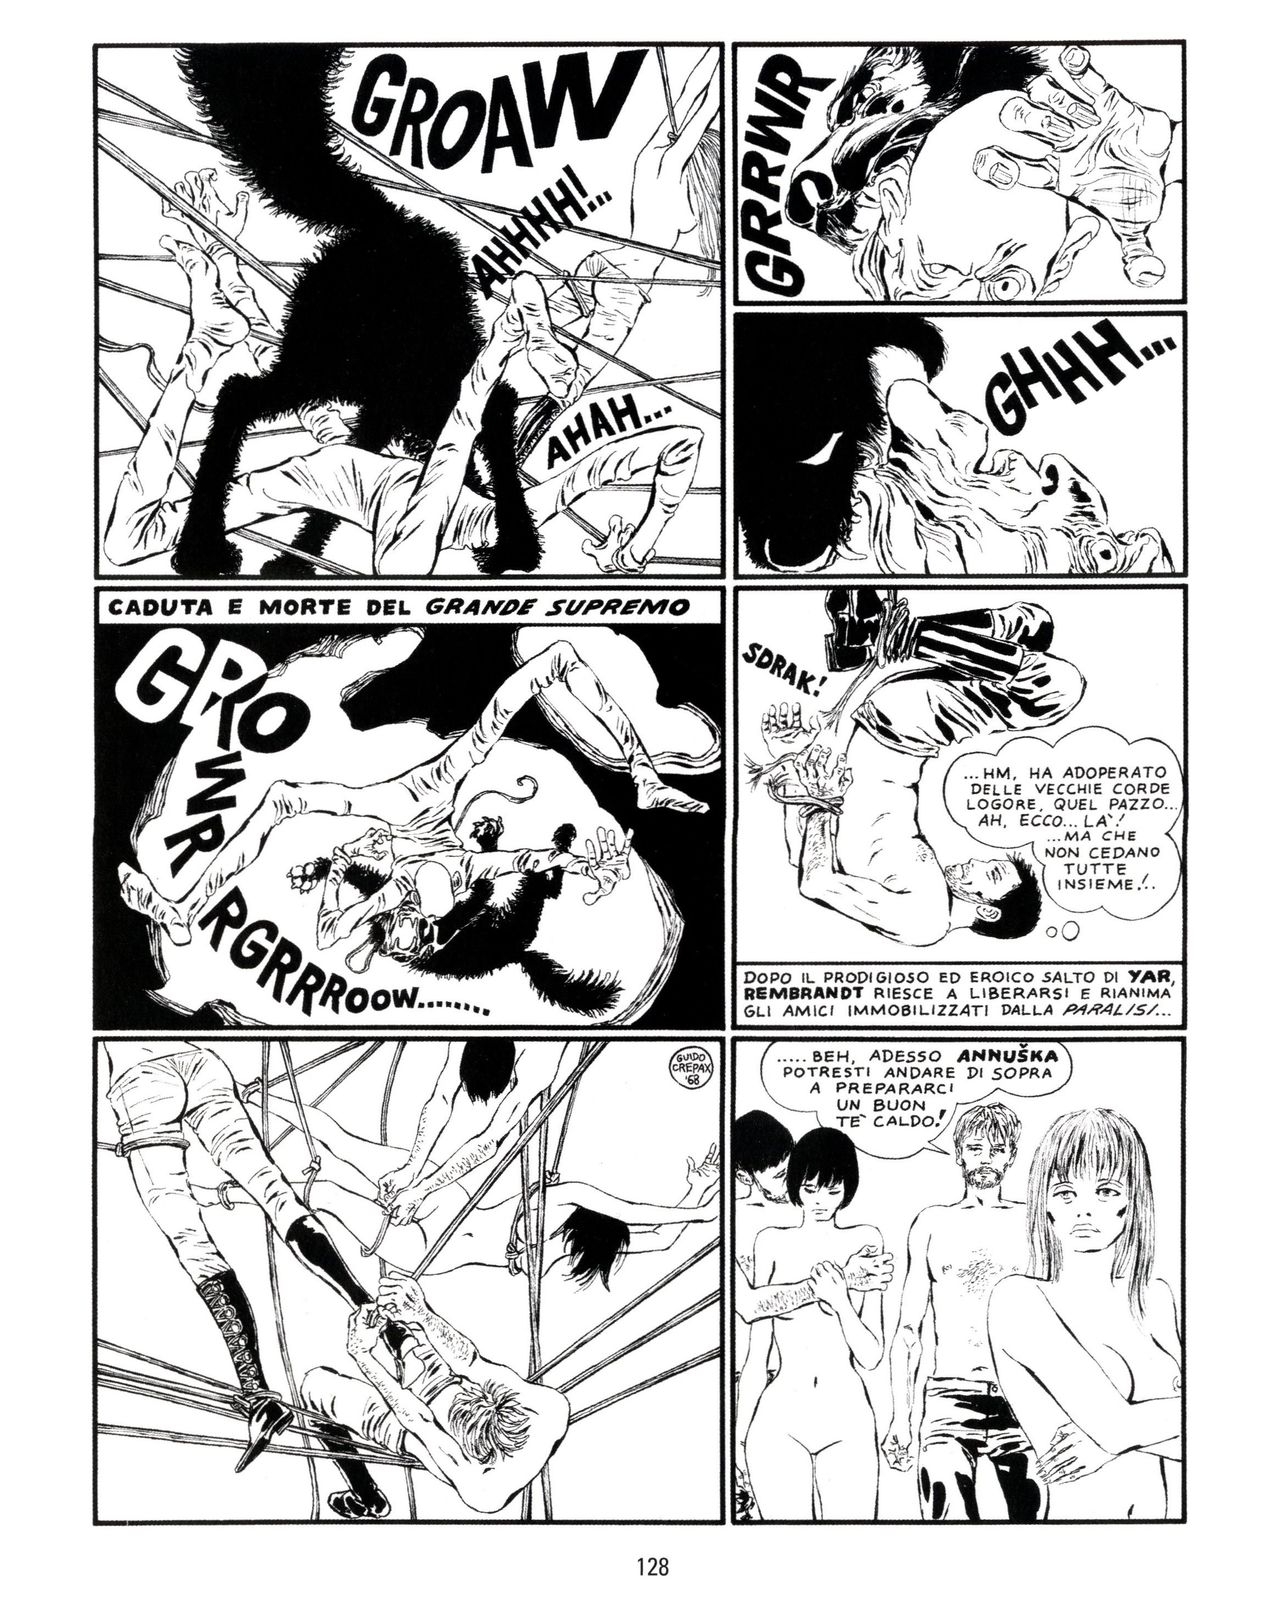 [Guido Crepax] Erotica Fumetti #25 : L'ascesa dei sotterranei : I cavalieri ciechi [Italian] 129